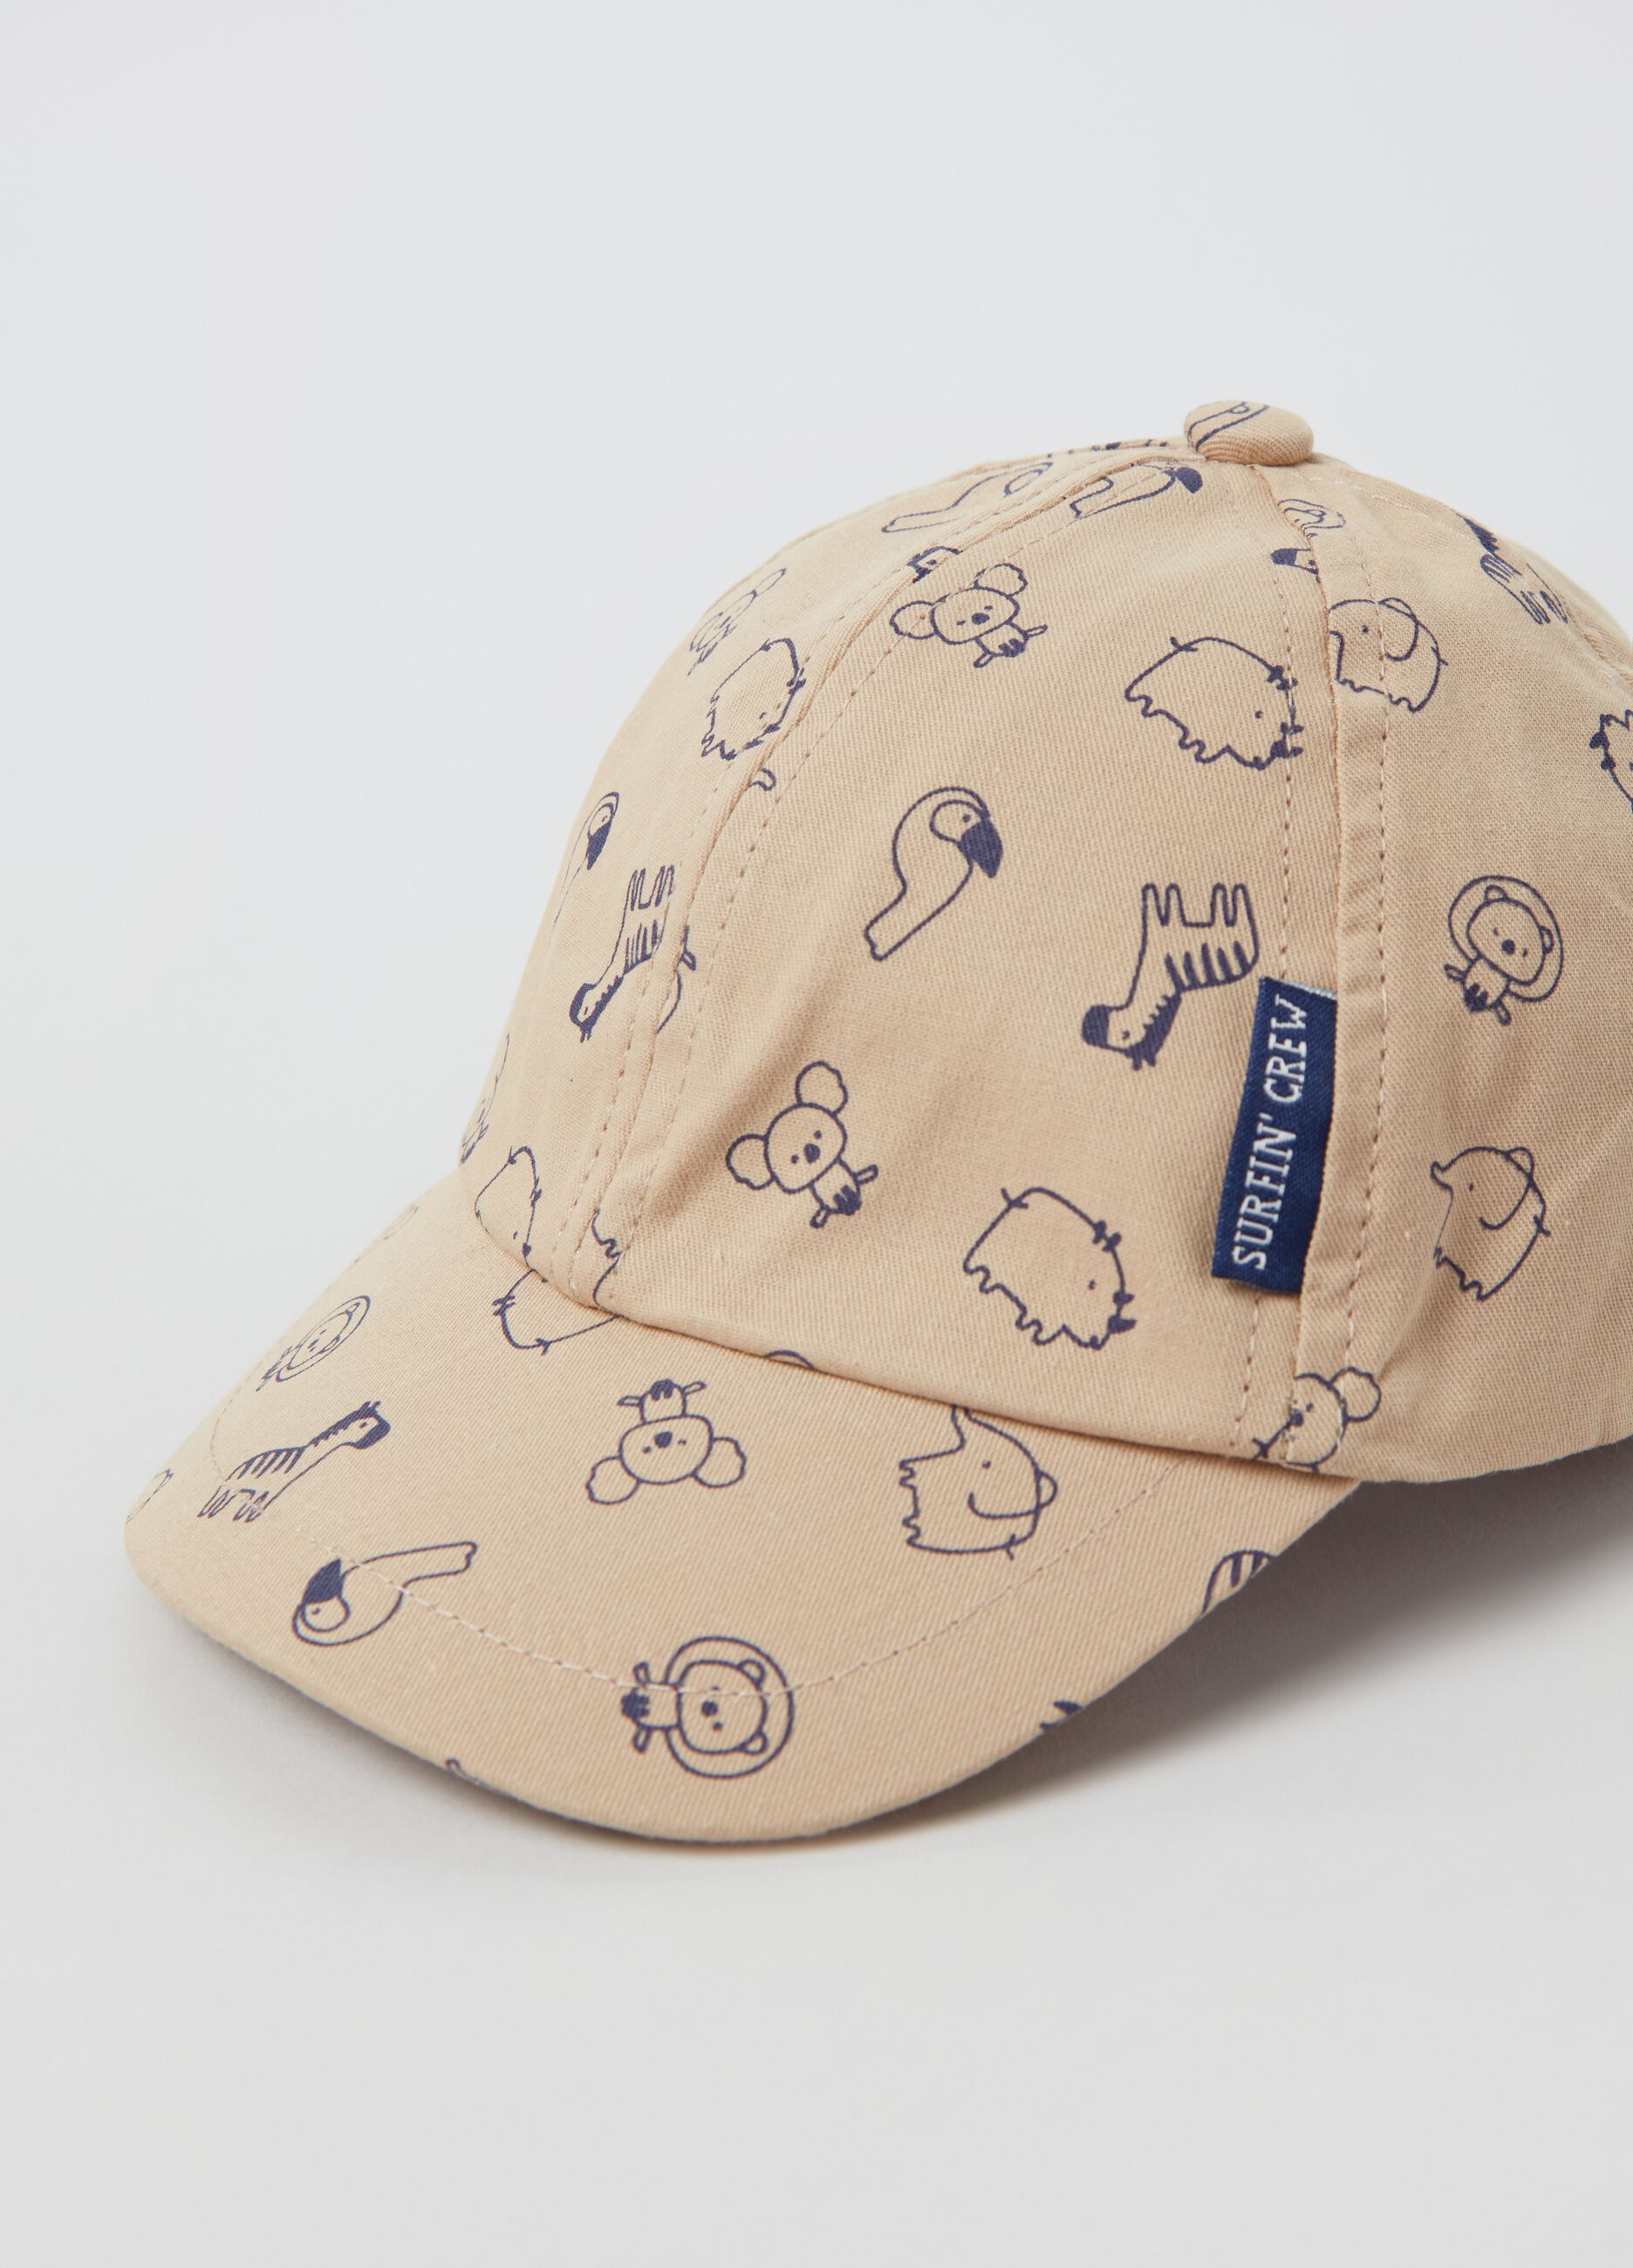 Baseball cap with animals pattern